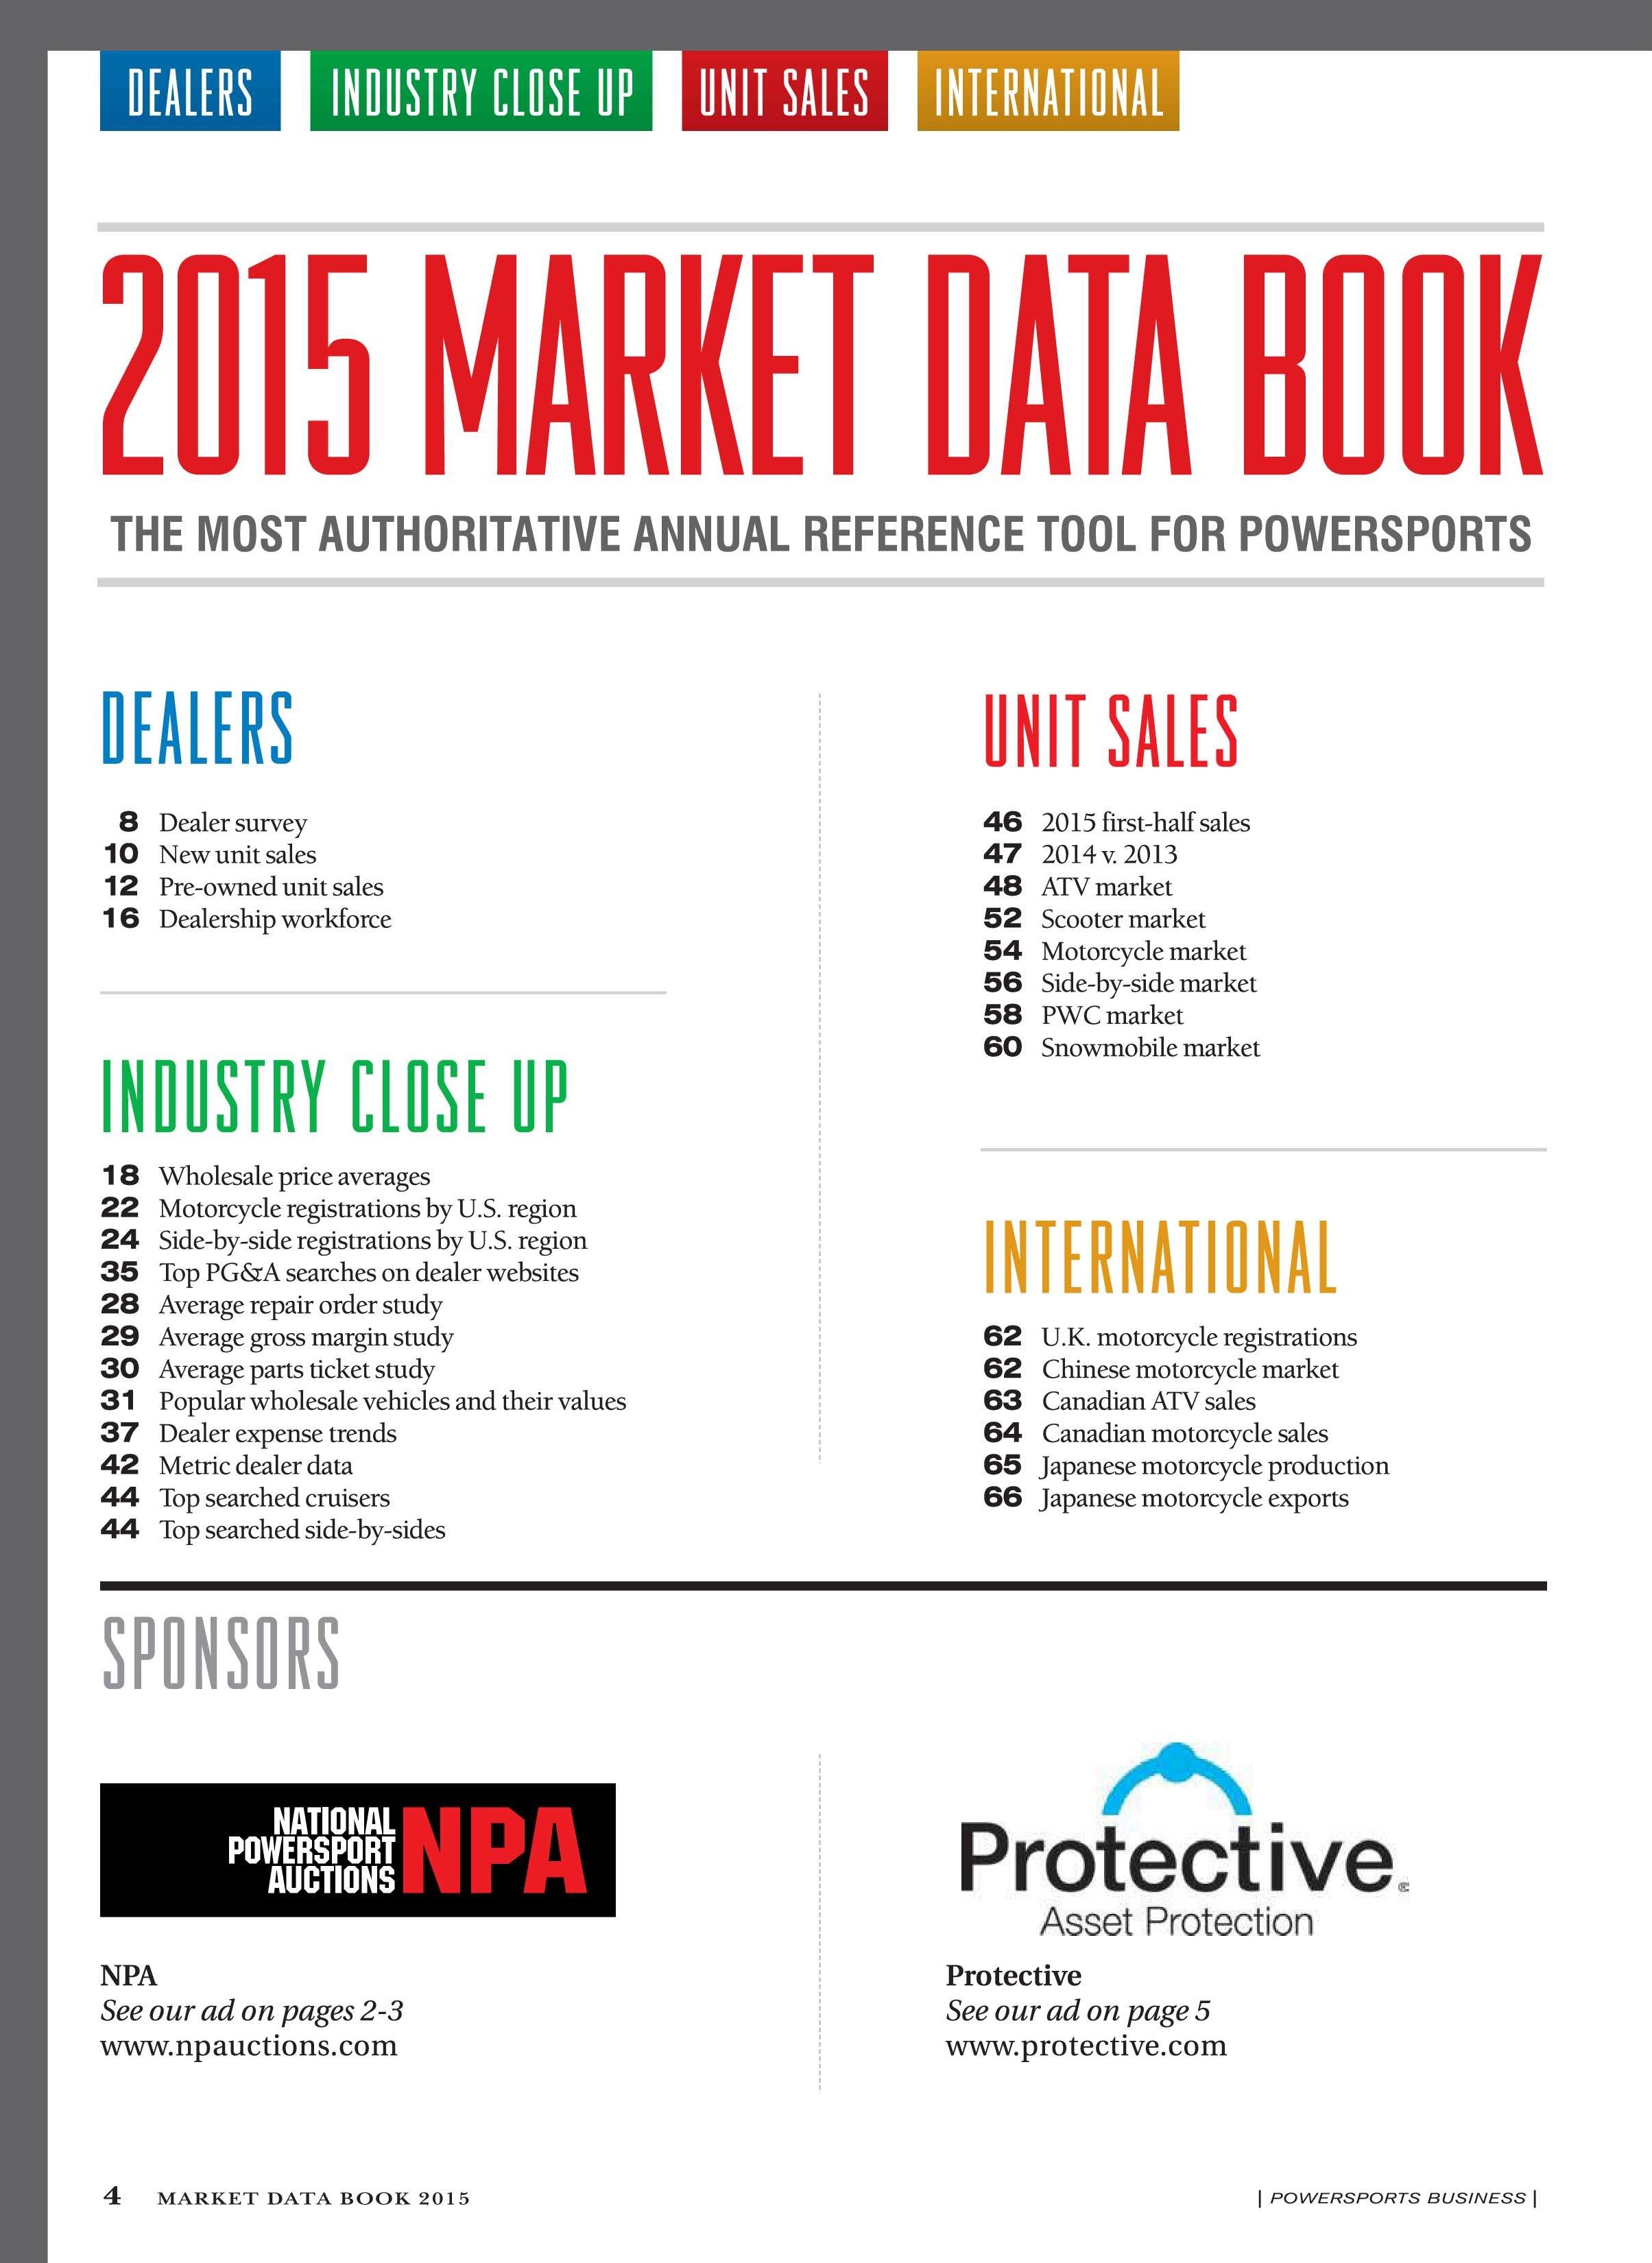 Powersports Business 2015 Market Data Book